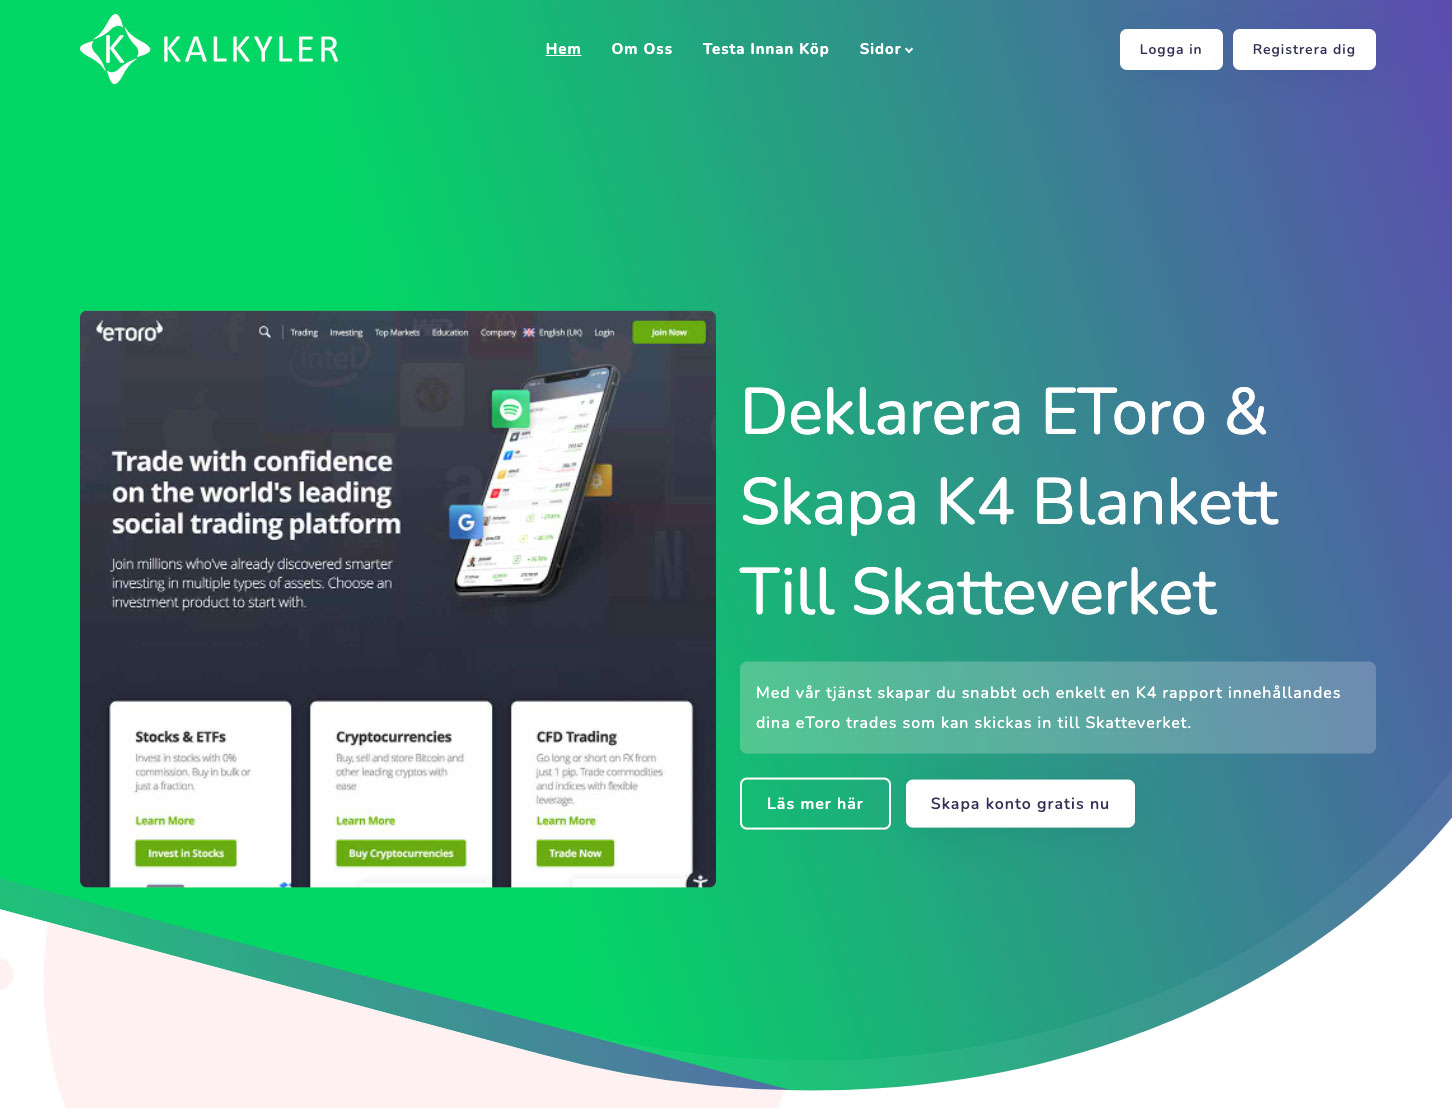 Kalkyler.se helps with tax and declaration towards Skatteverket related to eToro